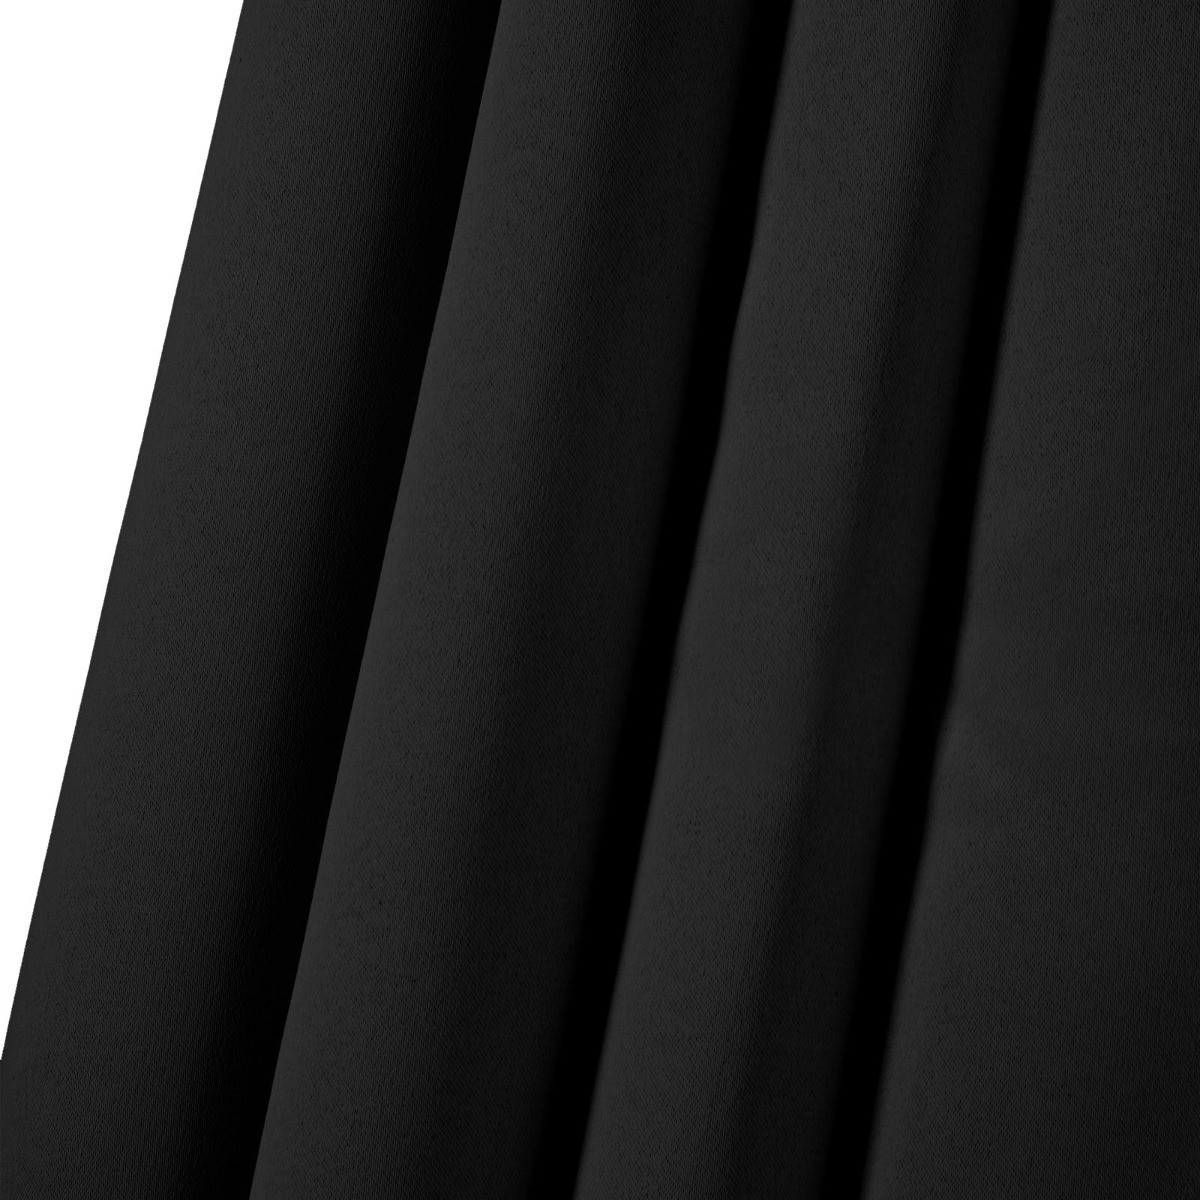 Dreamscene Pencil Pleat Thermal Blackout Curtains - Black, 90" x 90">